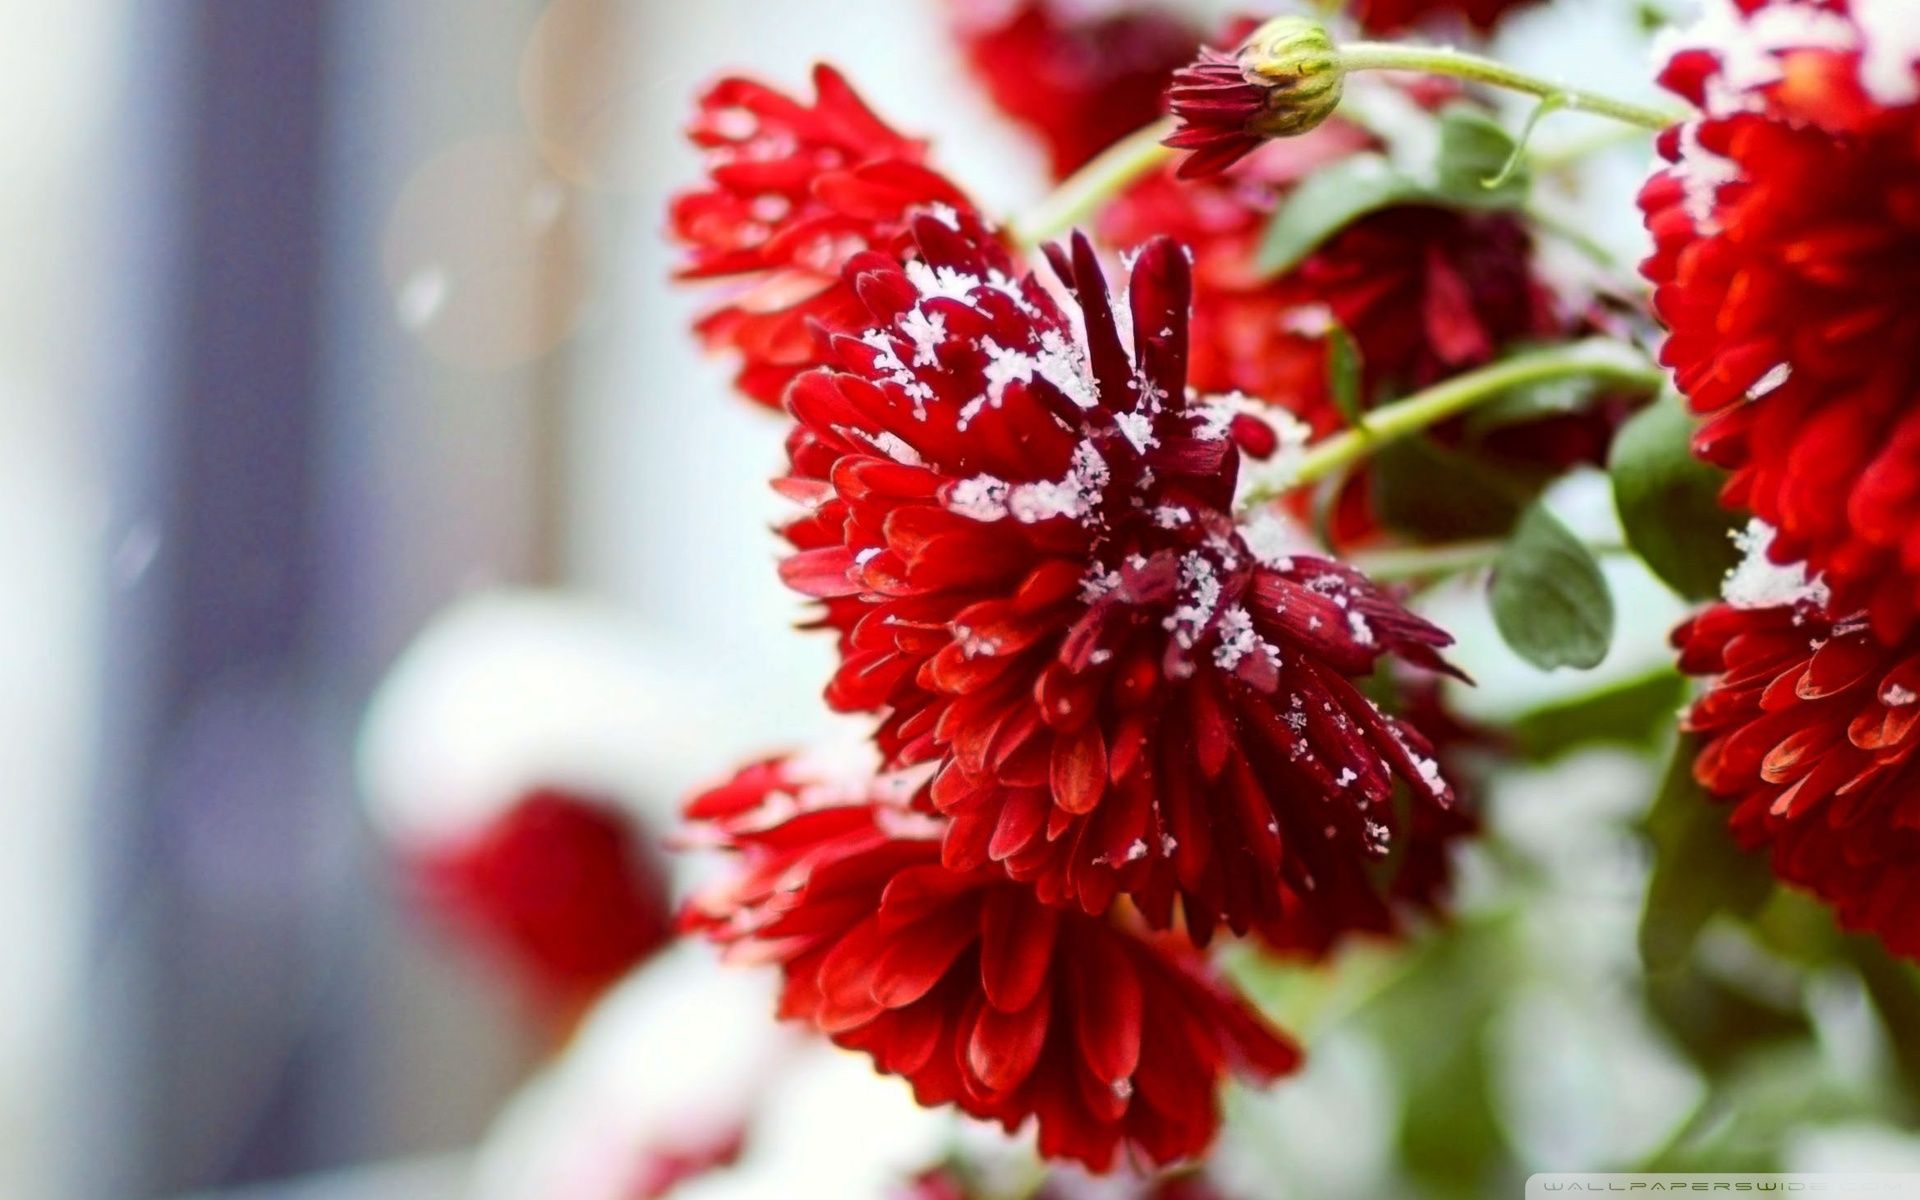 Snow Over Red Flowers HD desktop wallpaper, High Definition. Red flower wallpaper, Flower wallpaper, Flowers